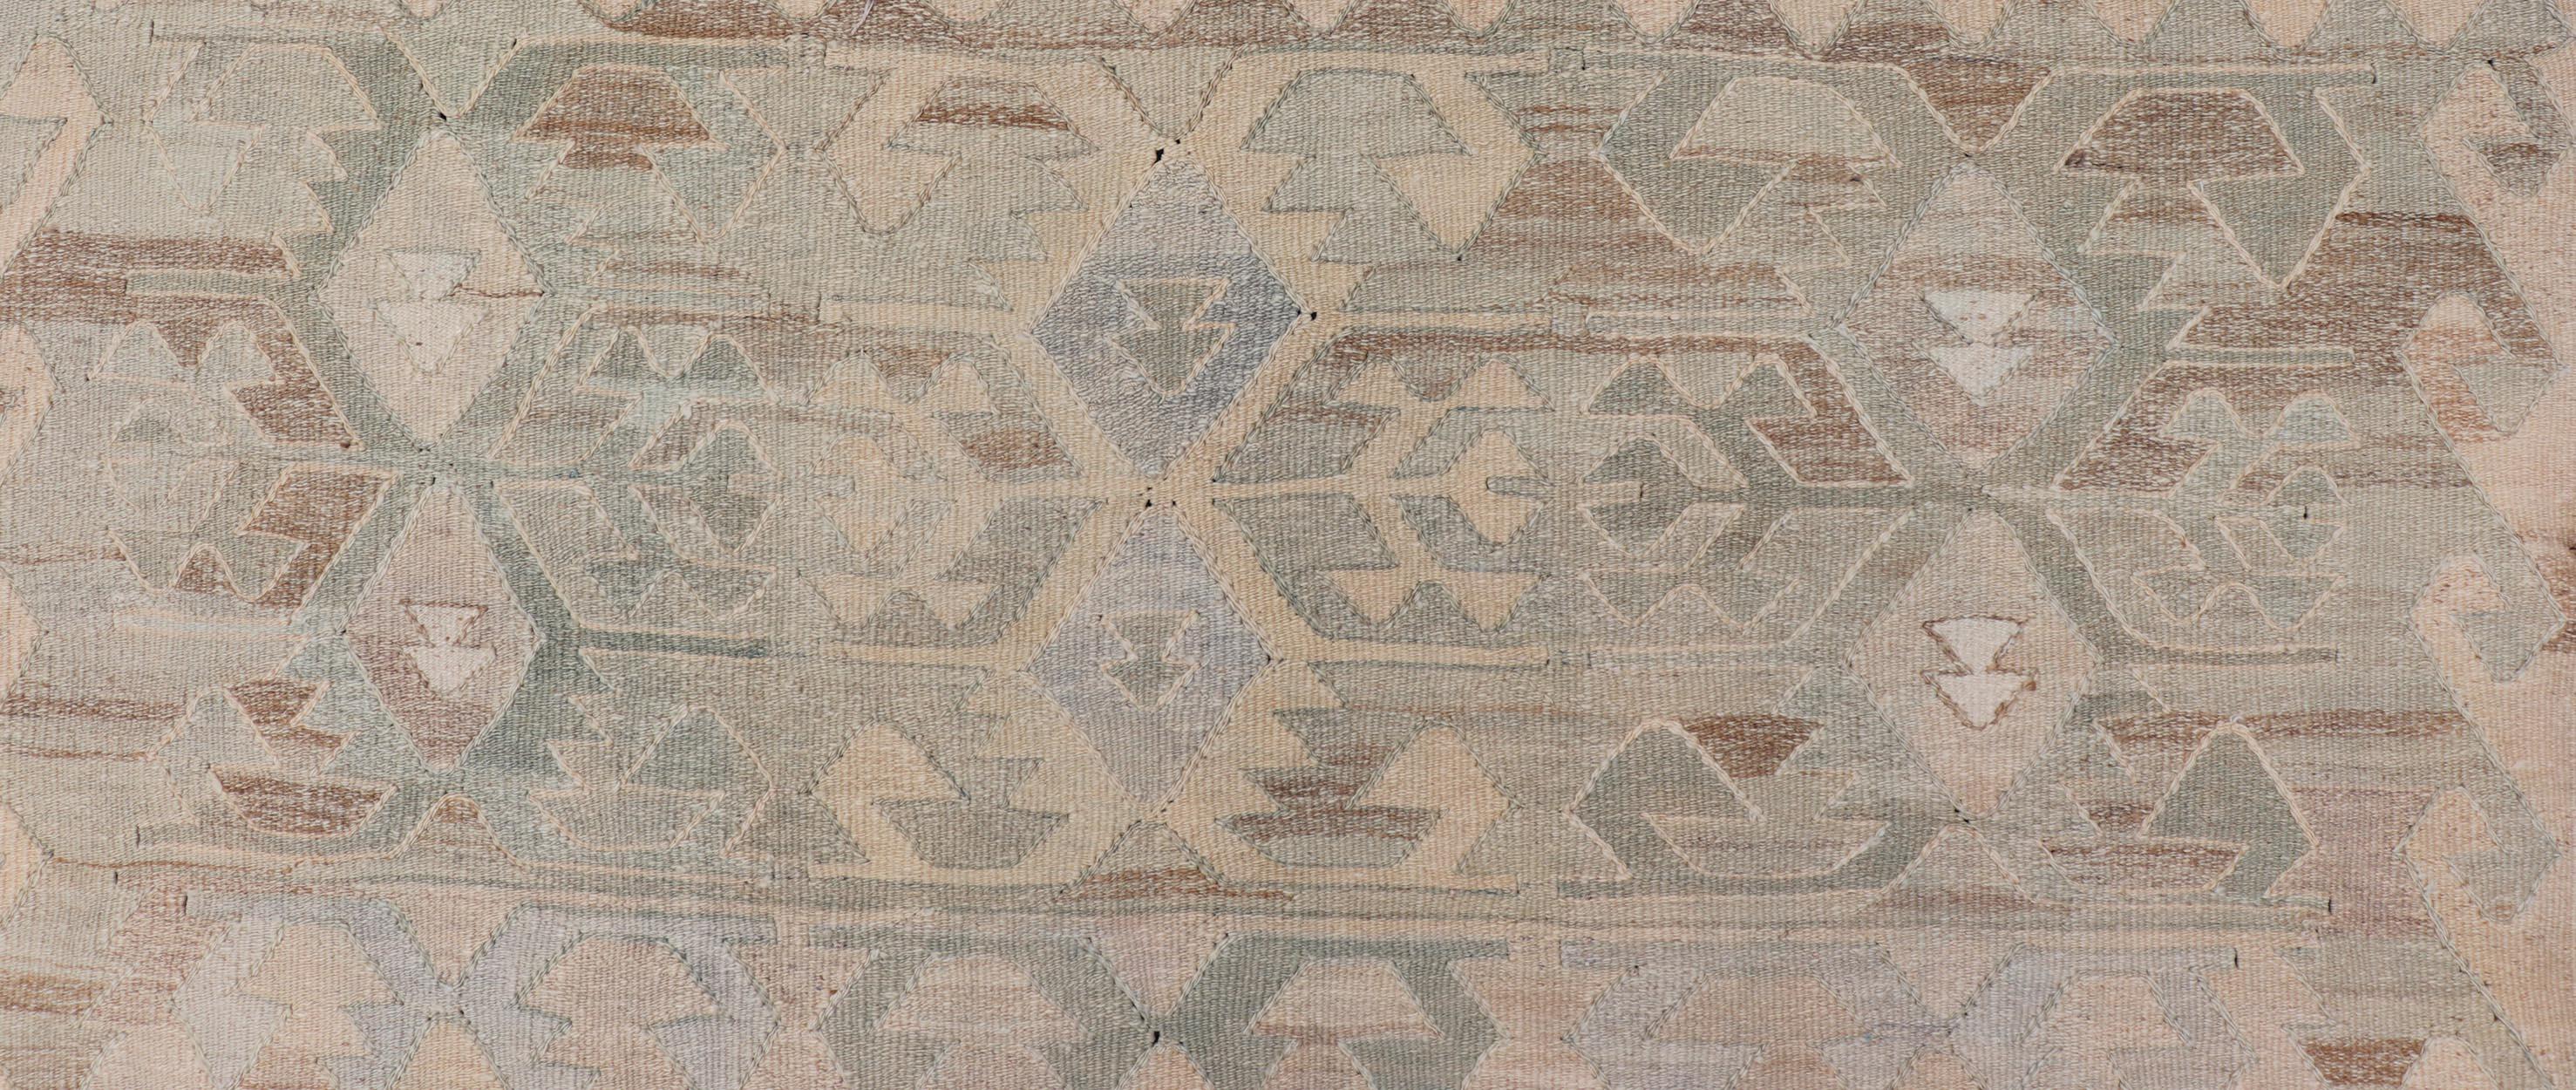 Wool Gallery Turkish Vintage Flat-Weave Tribal Designed Kilim in Earthy Tones For Sale